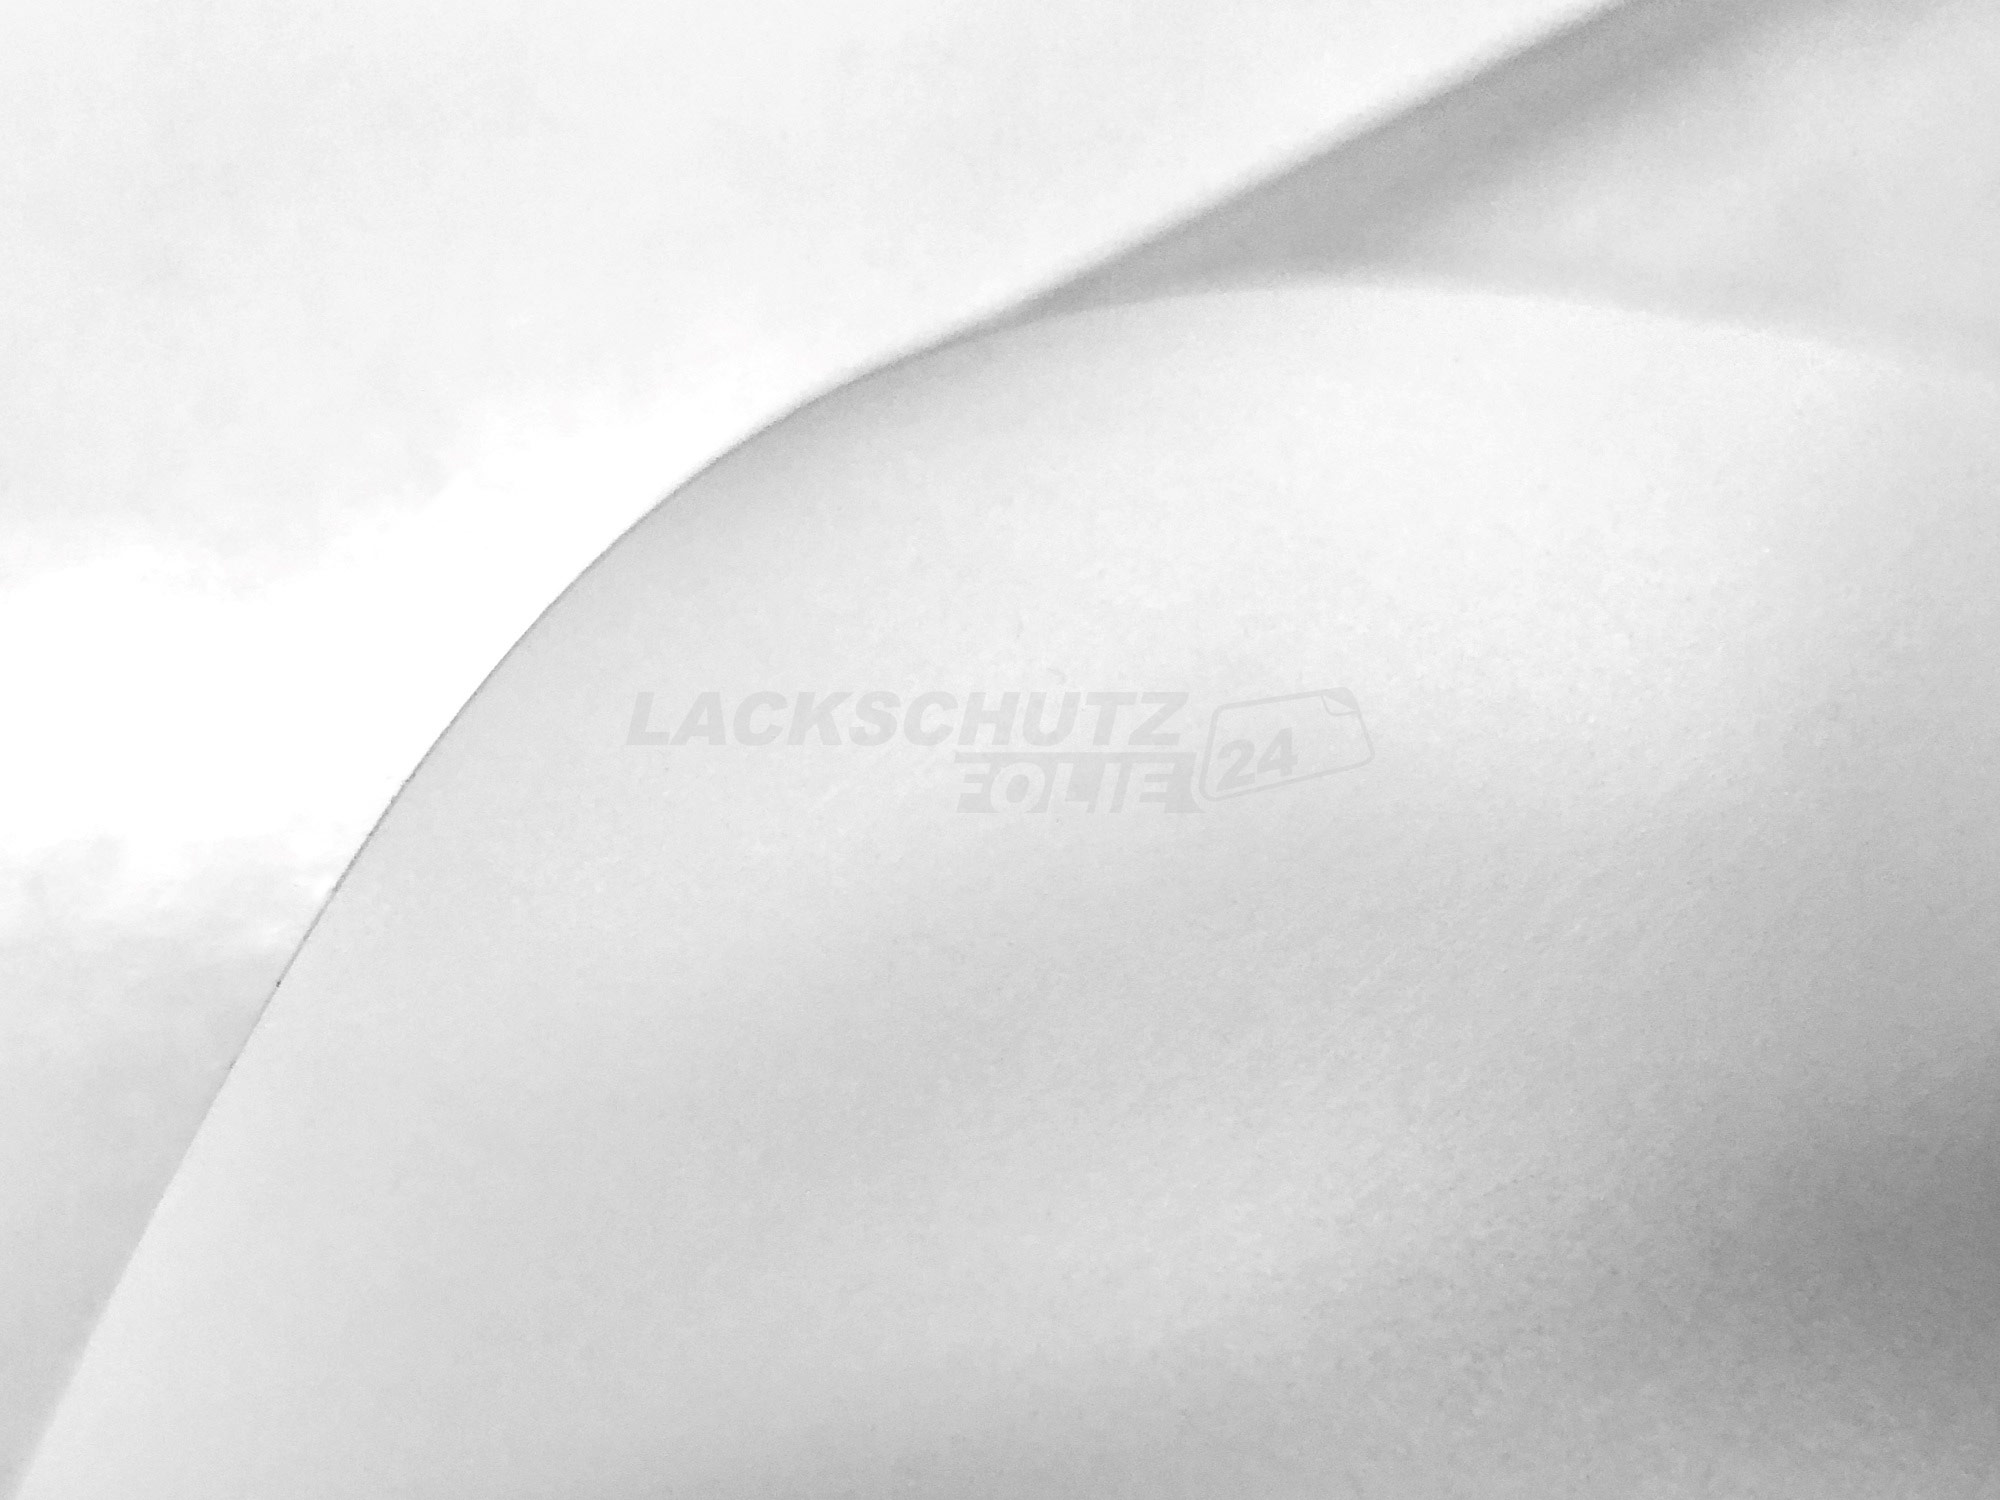 Ladekantenschutzfolie - Transparent Glatt MATT 110 µm stark  für Mercedes-Benz E-Klasse Limousine Typ W213, ab BJ 2016 + Facelift